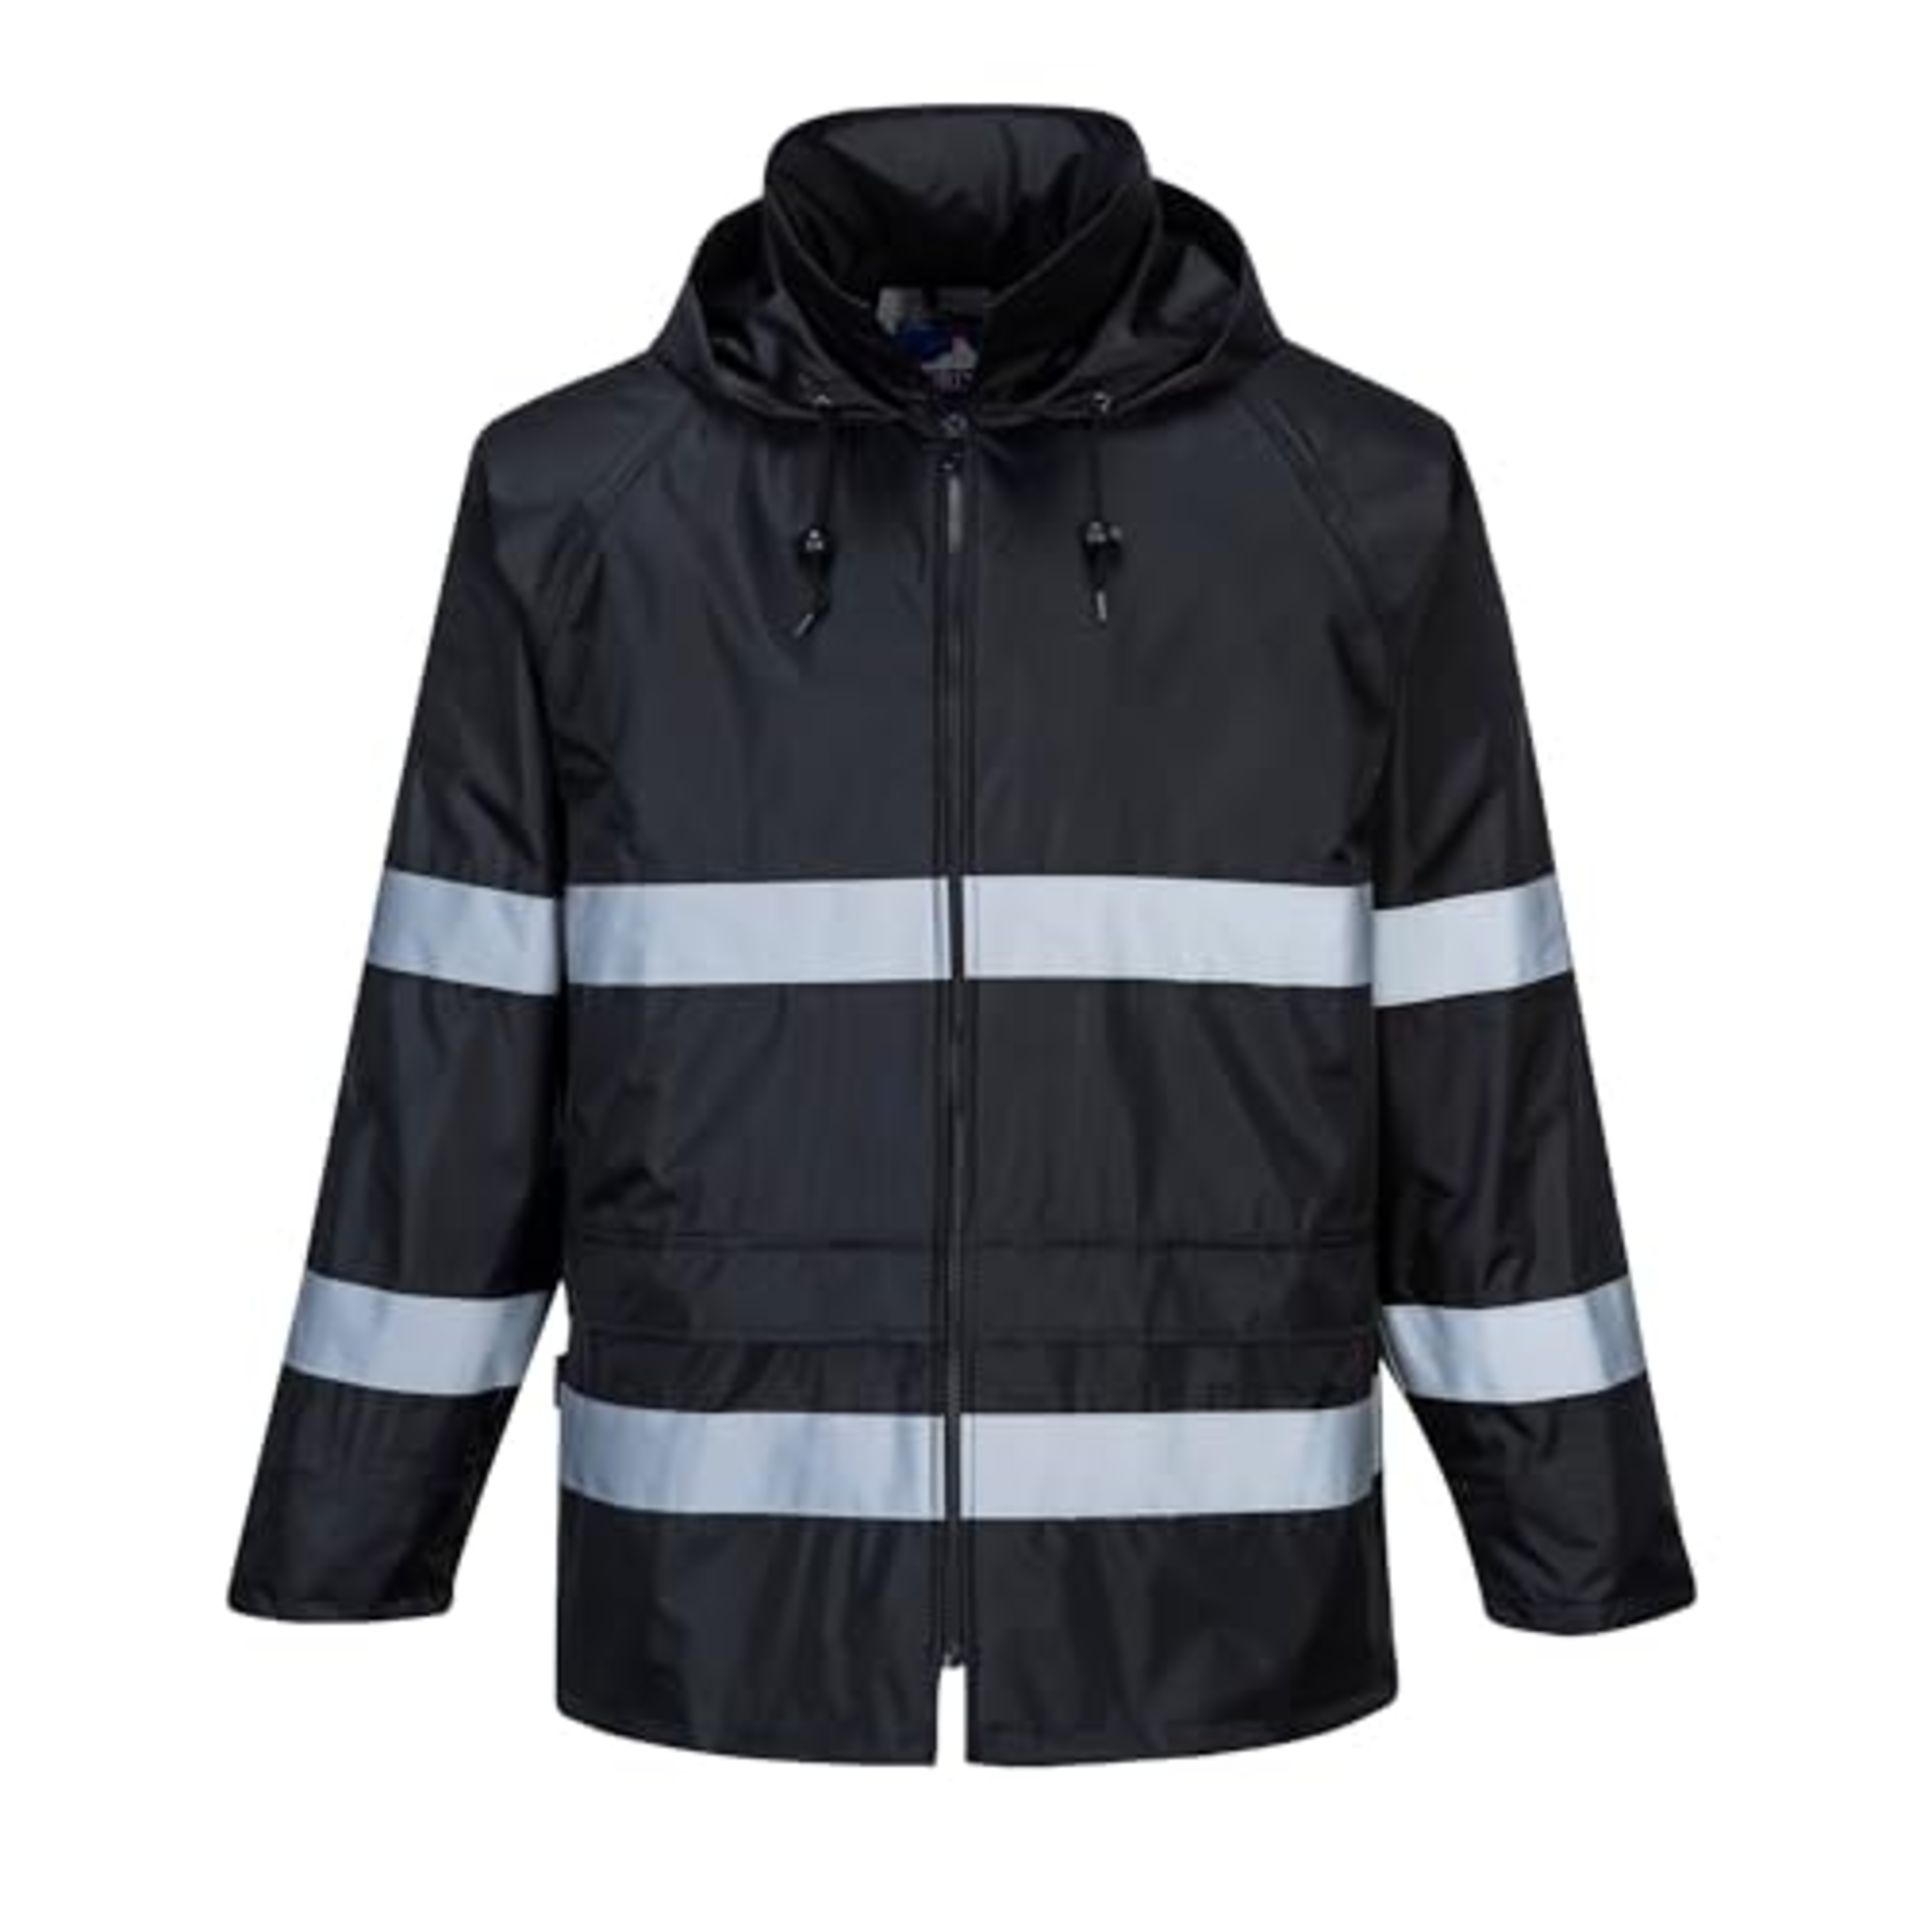 Portwest Classic Iona Rain Jacket, Size: L, Colour: Black, F440BKRL